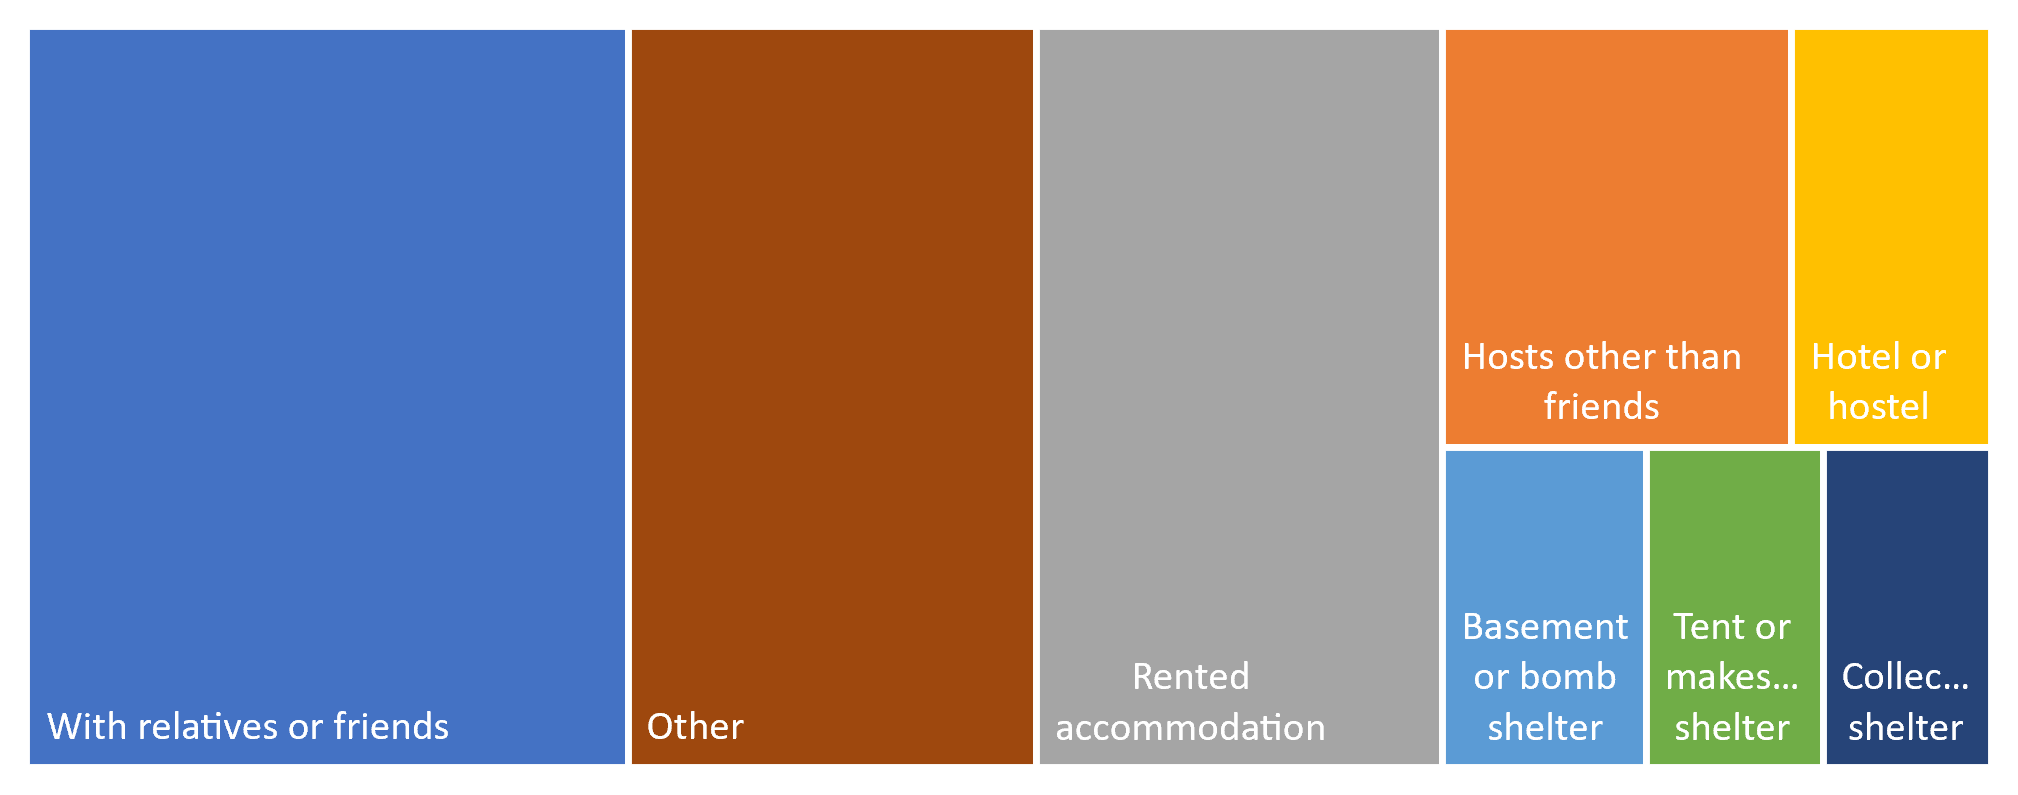 Figure 2: Shelter of displaced respondents